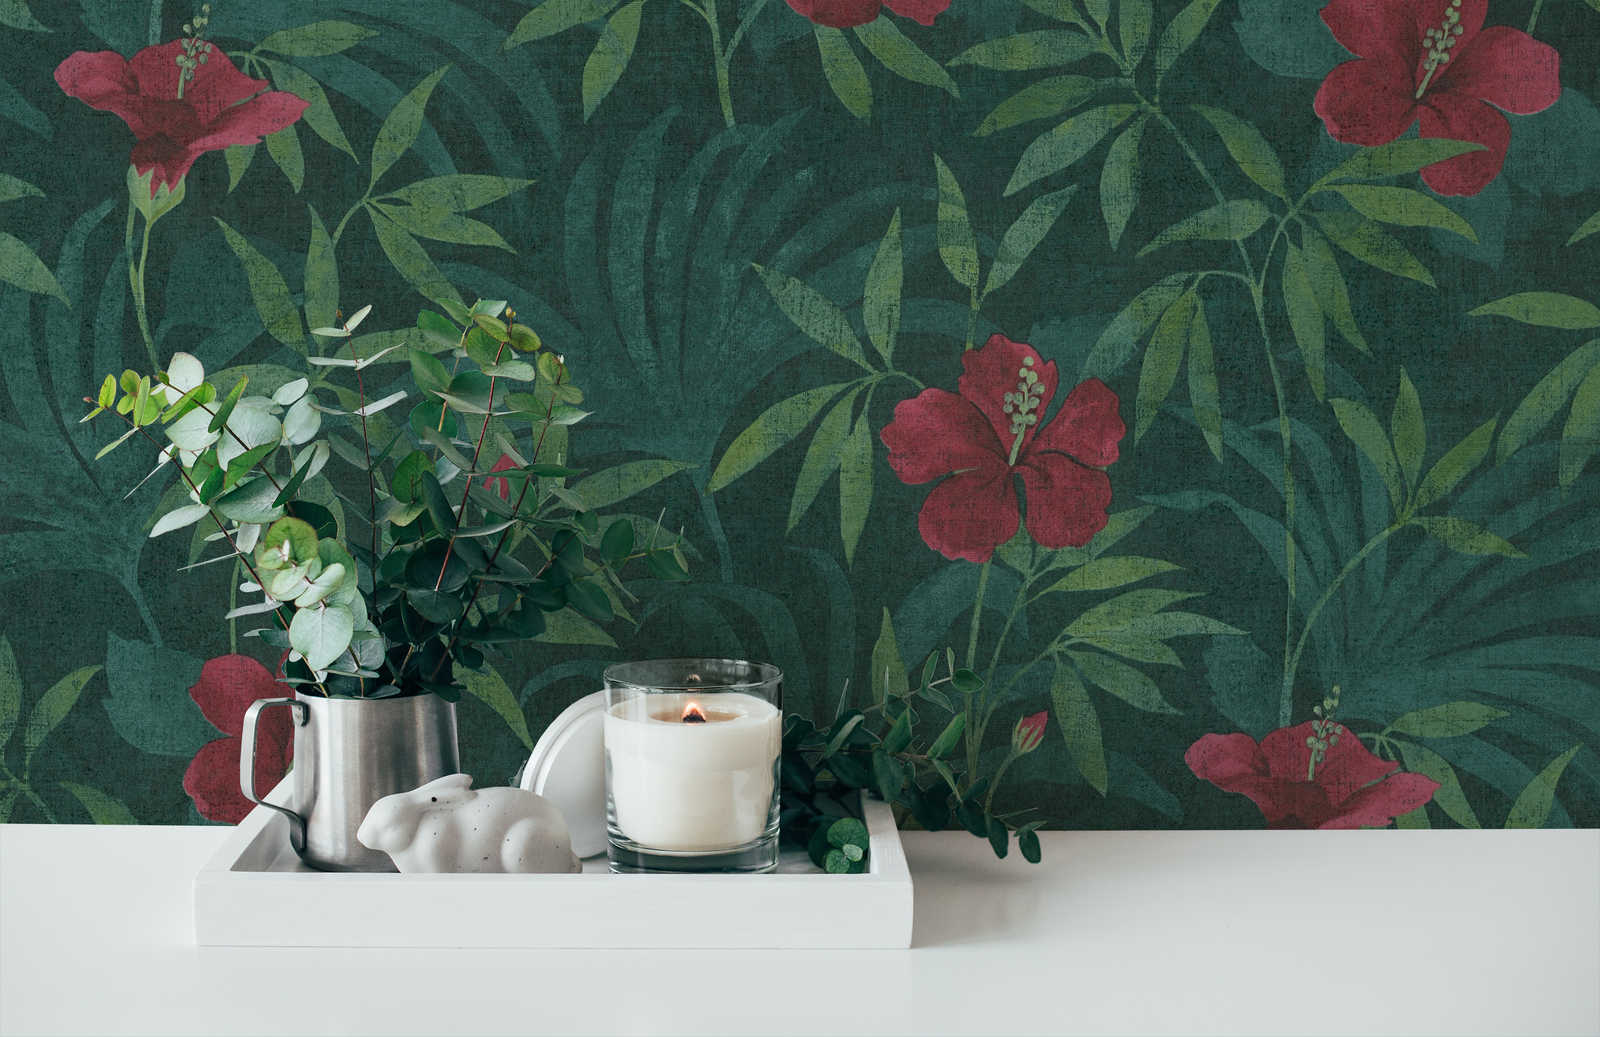             Jungle wallpaper green jungle & hibiscus flowers - green, red
        